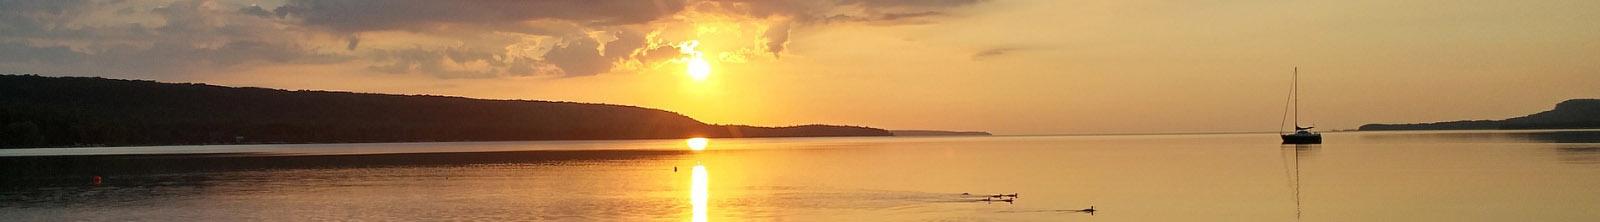 Sunset view of a shore on Lake Michigan